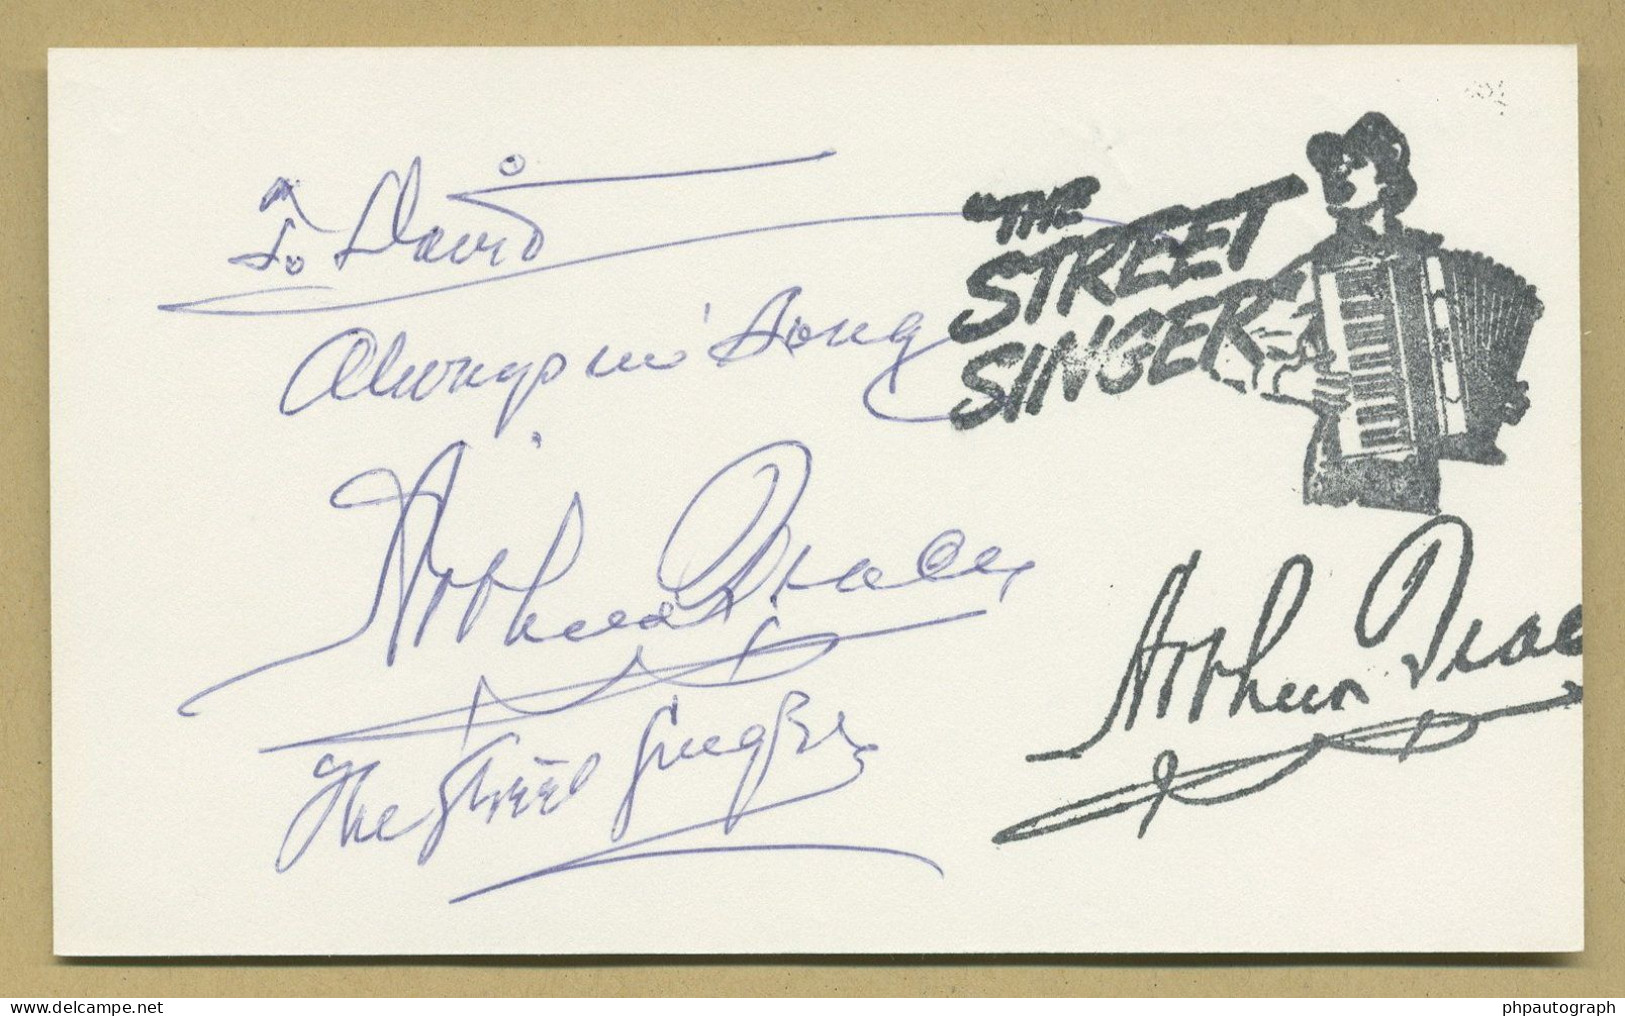 Arthur Tracy (1899-1997) - The Street Singer - Signed Card + Photo - 1985 - COA - Zangers & Muzikanten